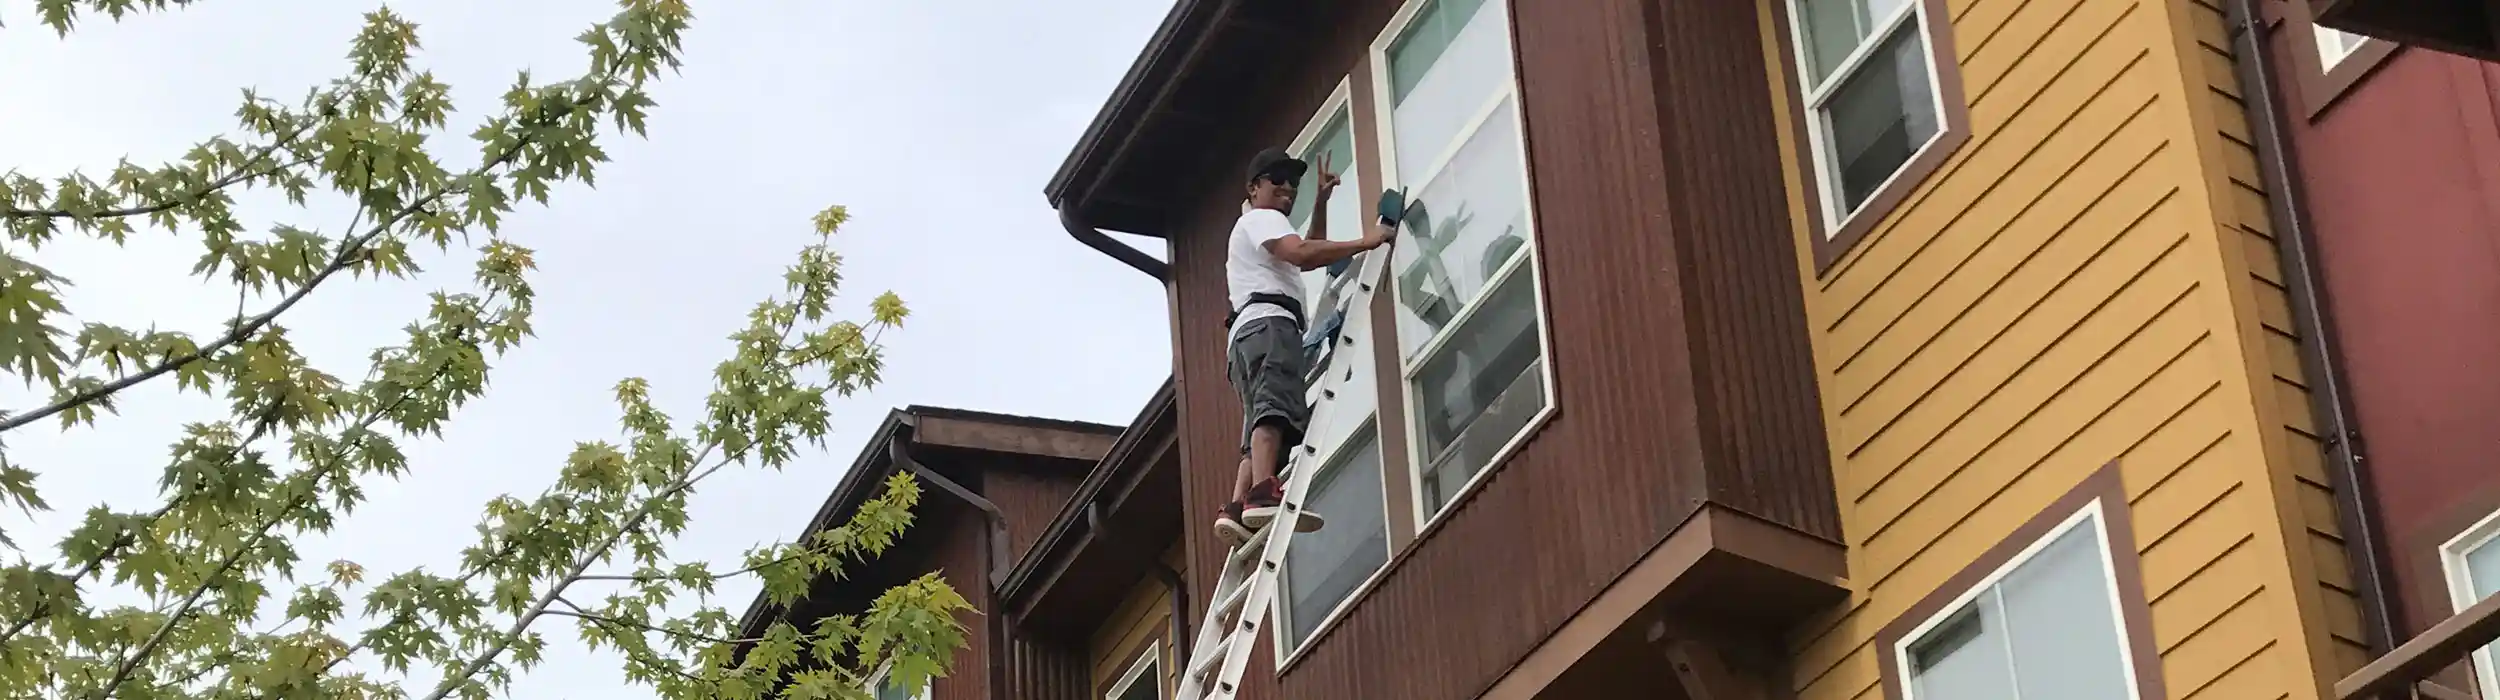 Header image showing Window Cleaning in Durango Colorado